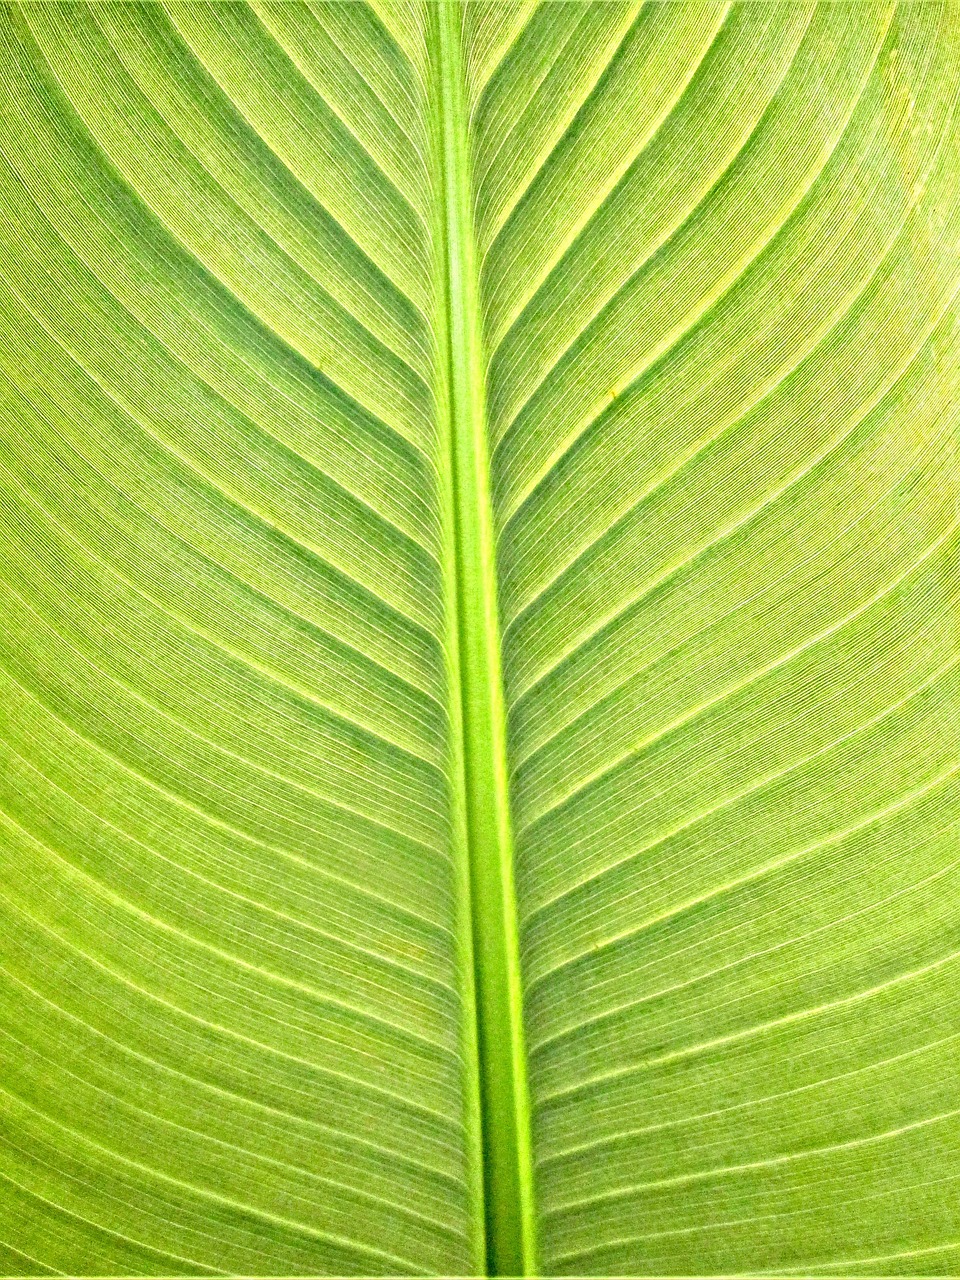 plants banana leaf texture free photo